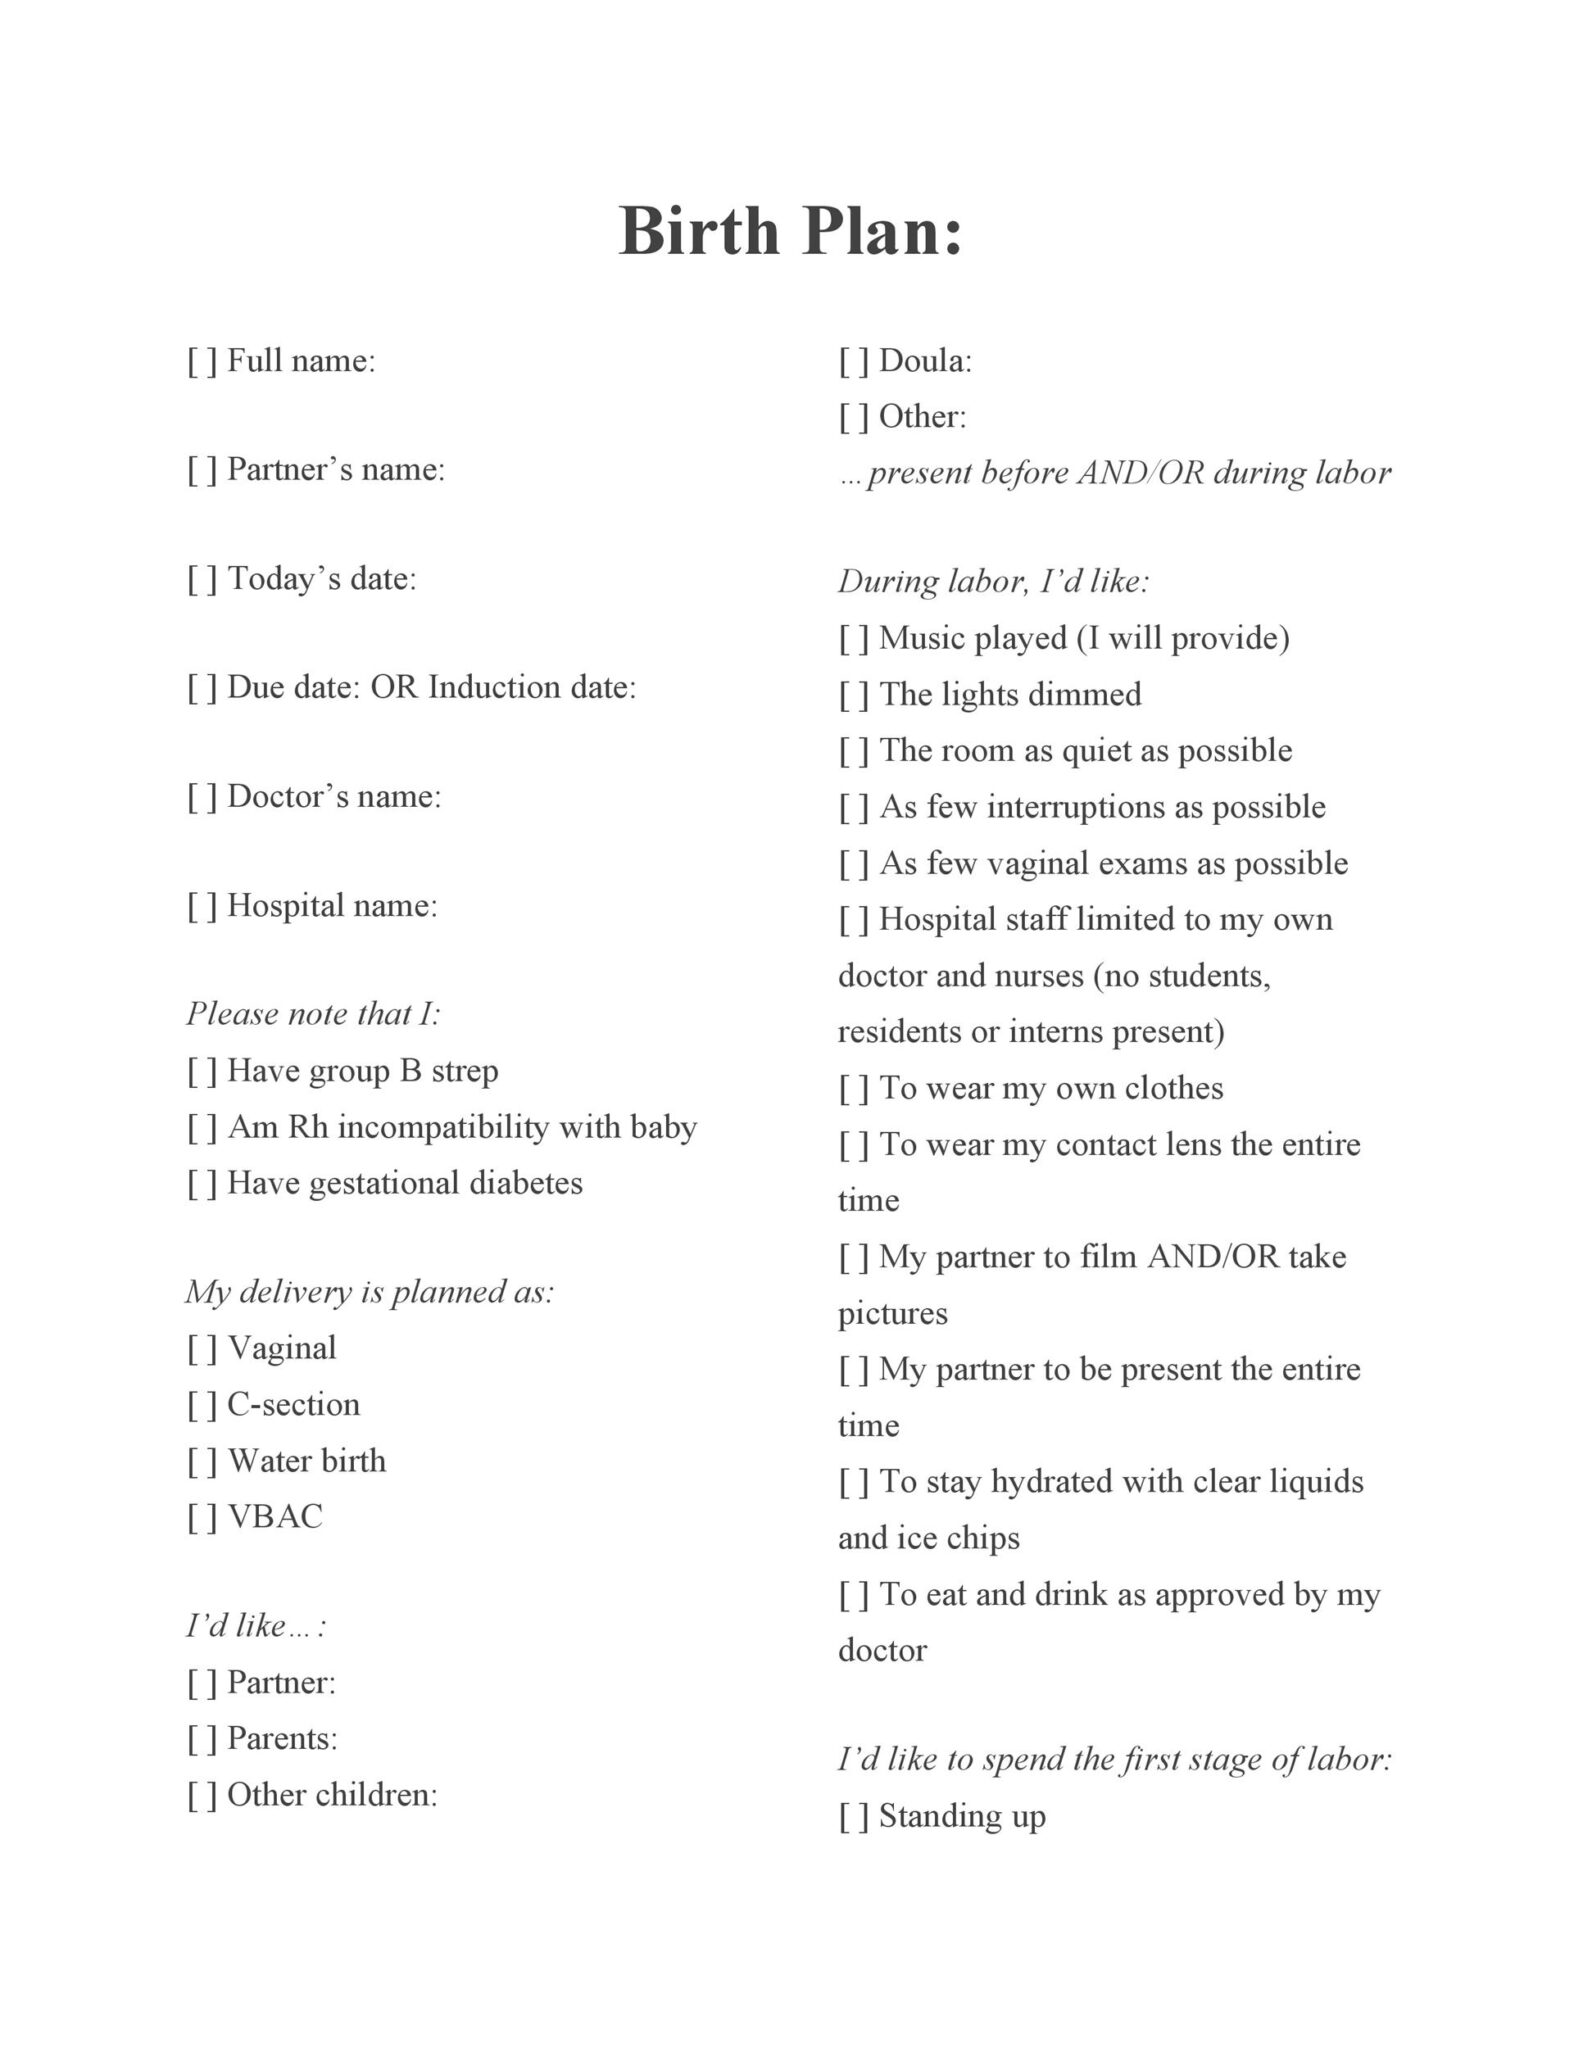 birth-plan-examples-50-free-sample-redlinesp